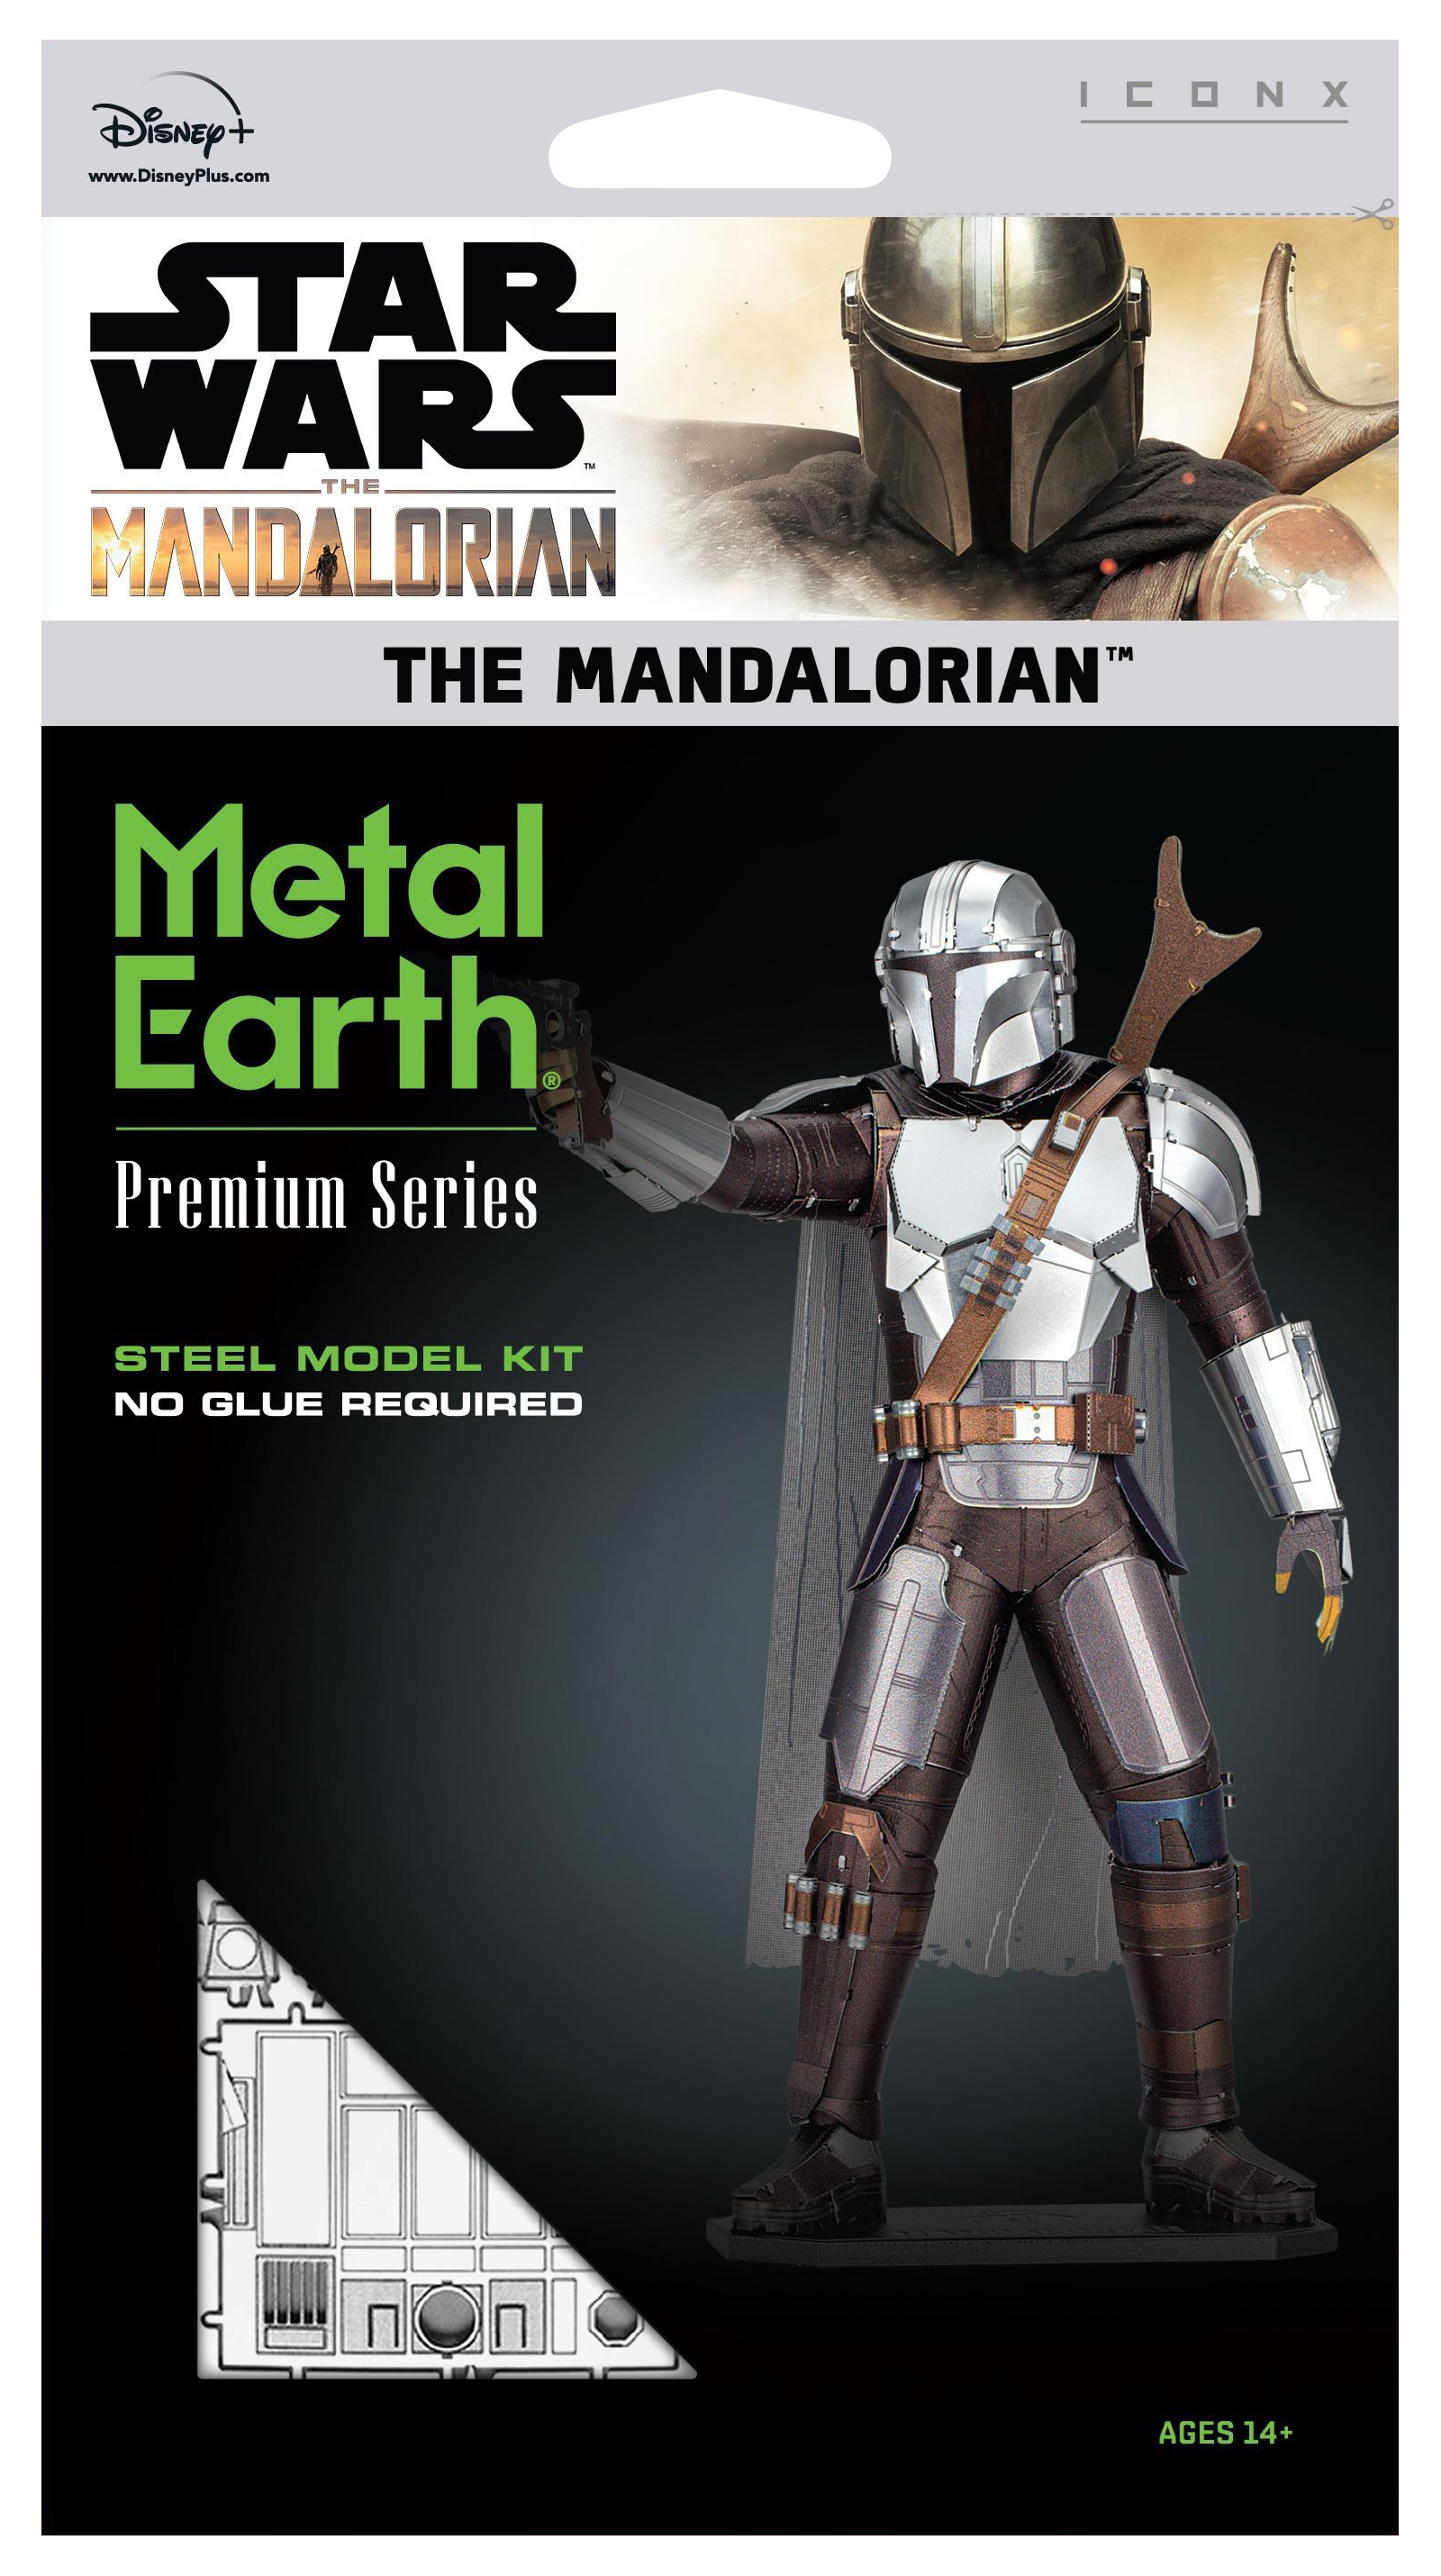 Metal Earth Iconx - Star Wars The Mandalorian    